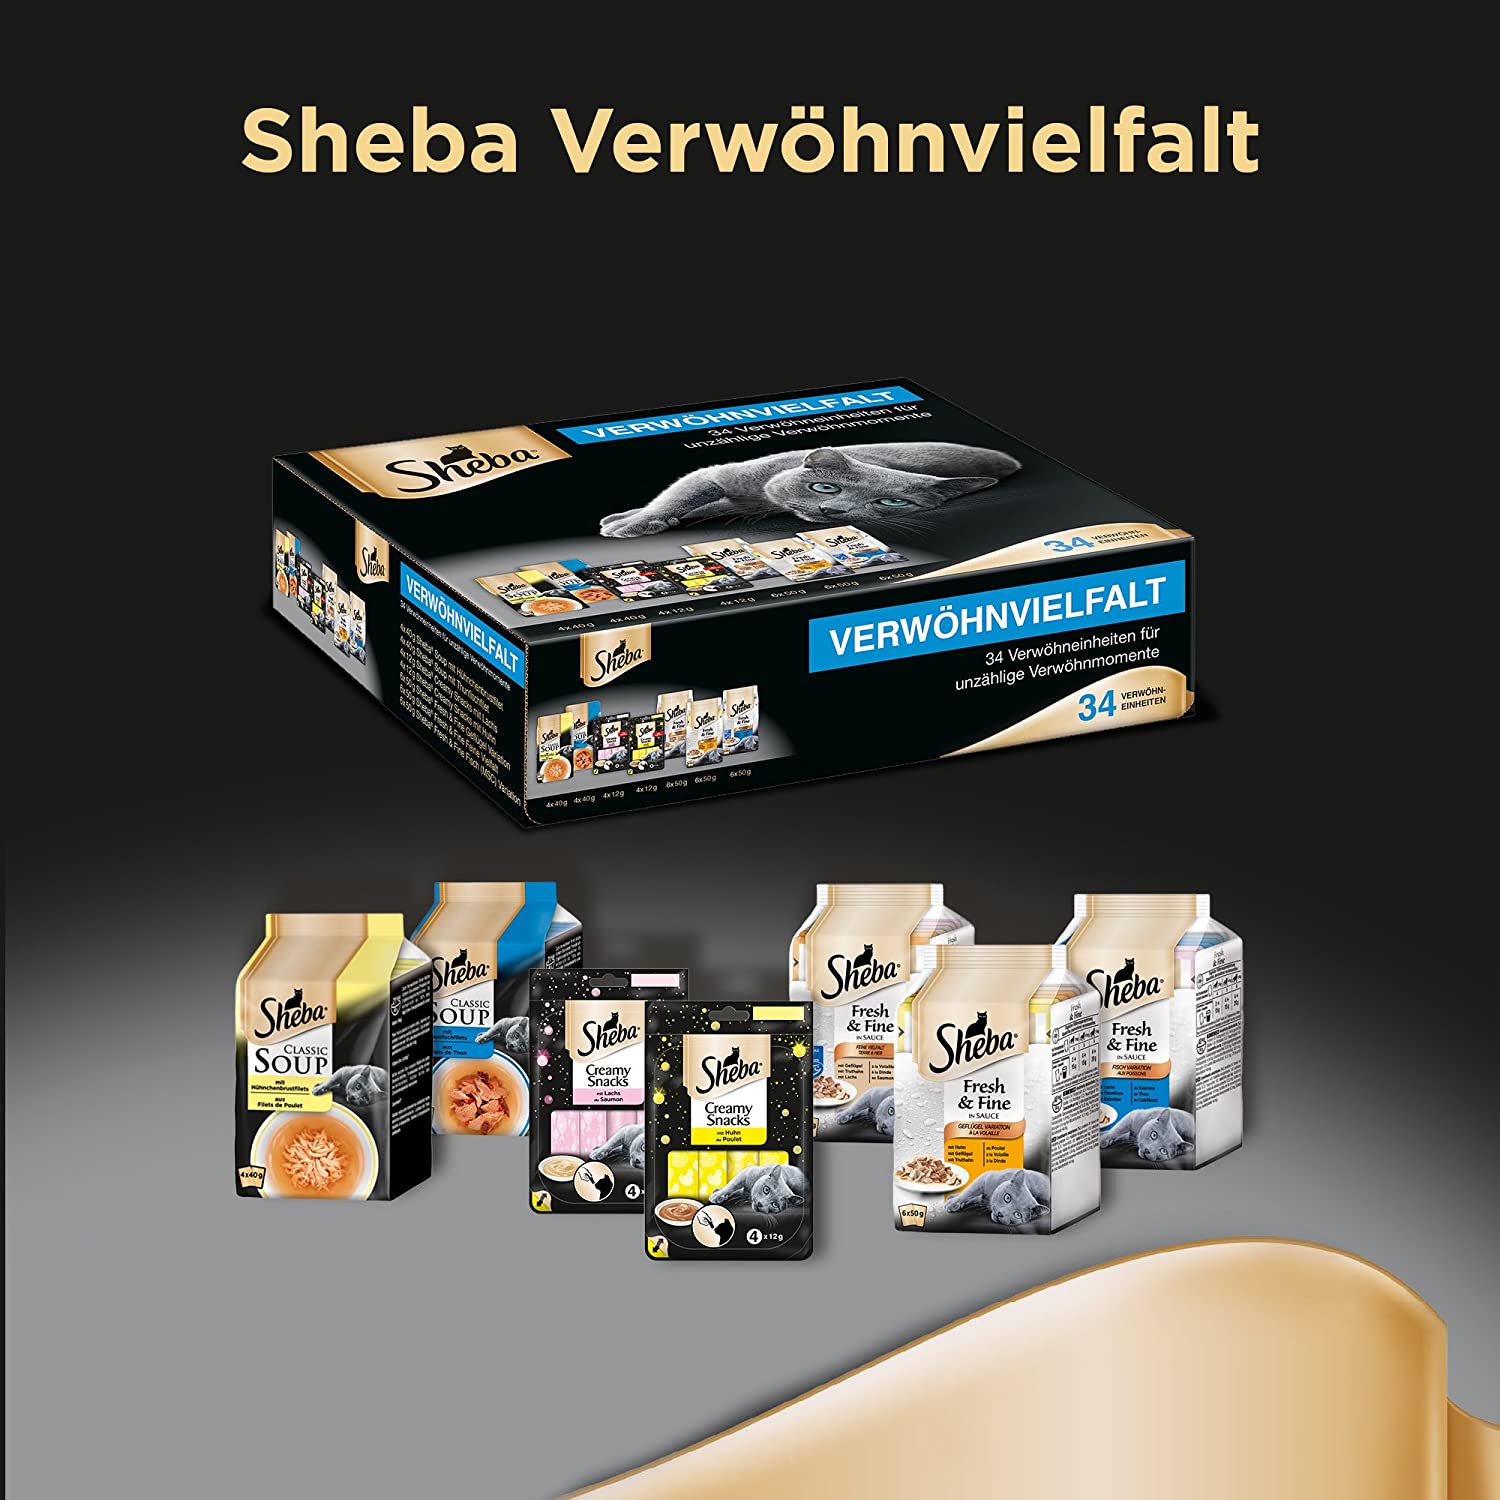  Sheba Pack de Mezcla de SEBA – Variado pienso para Gatos Soup, Fresh & Fine y cremosos Aperitivos – 34 Unidades en Diferentes variedades 